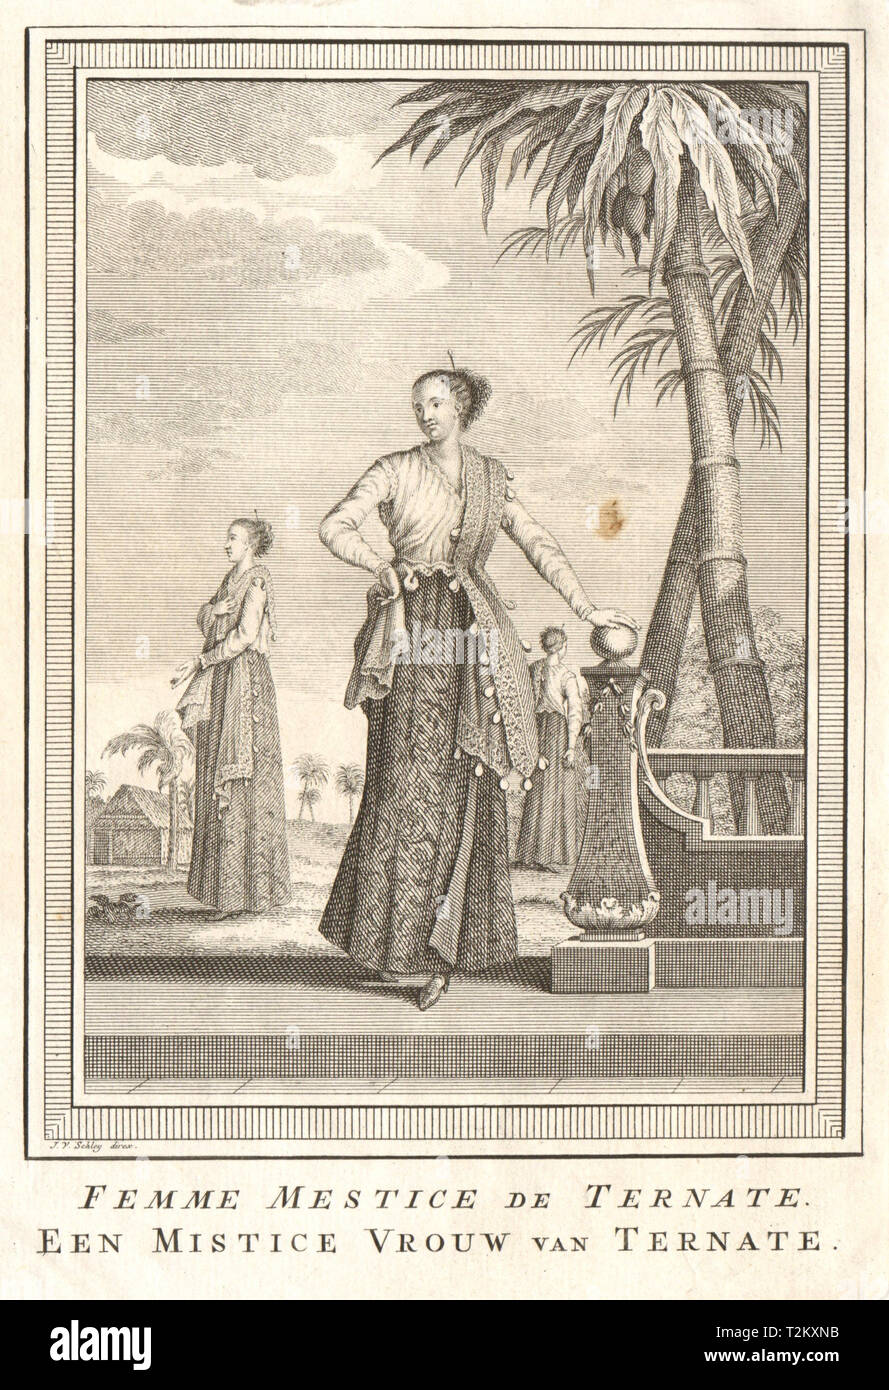 'Femme Mestice de Ternate'. Mujer mestiza, Ternate, islas Molucas. SCHLEY 1755 Foto de stock